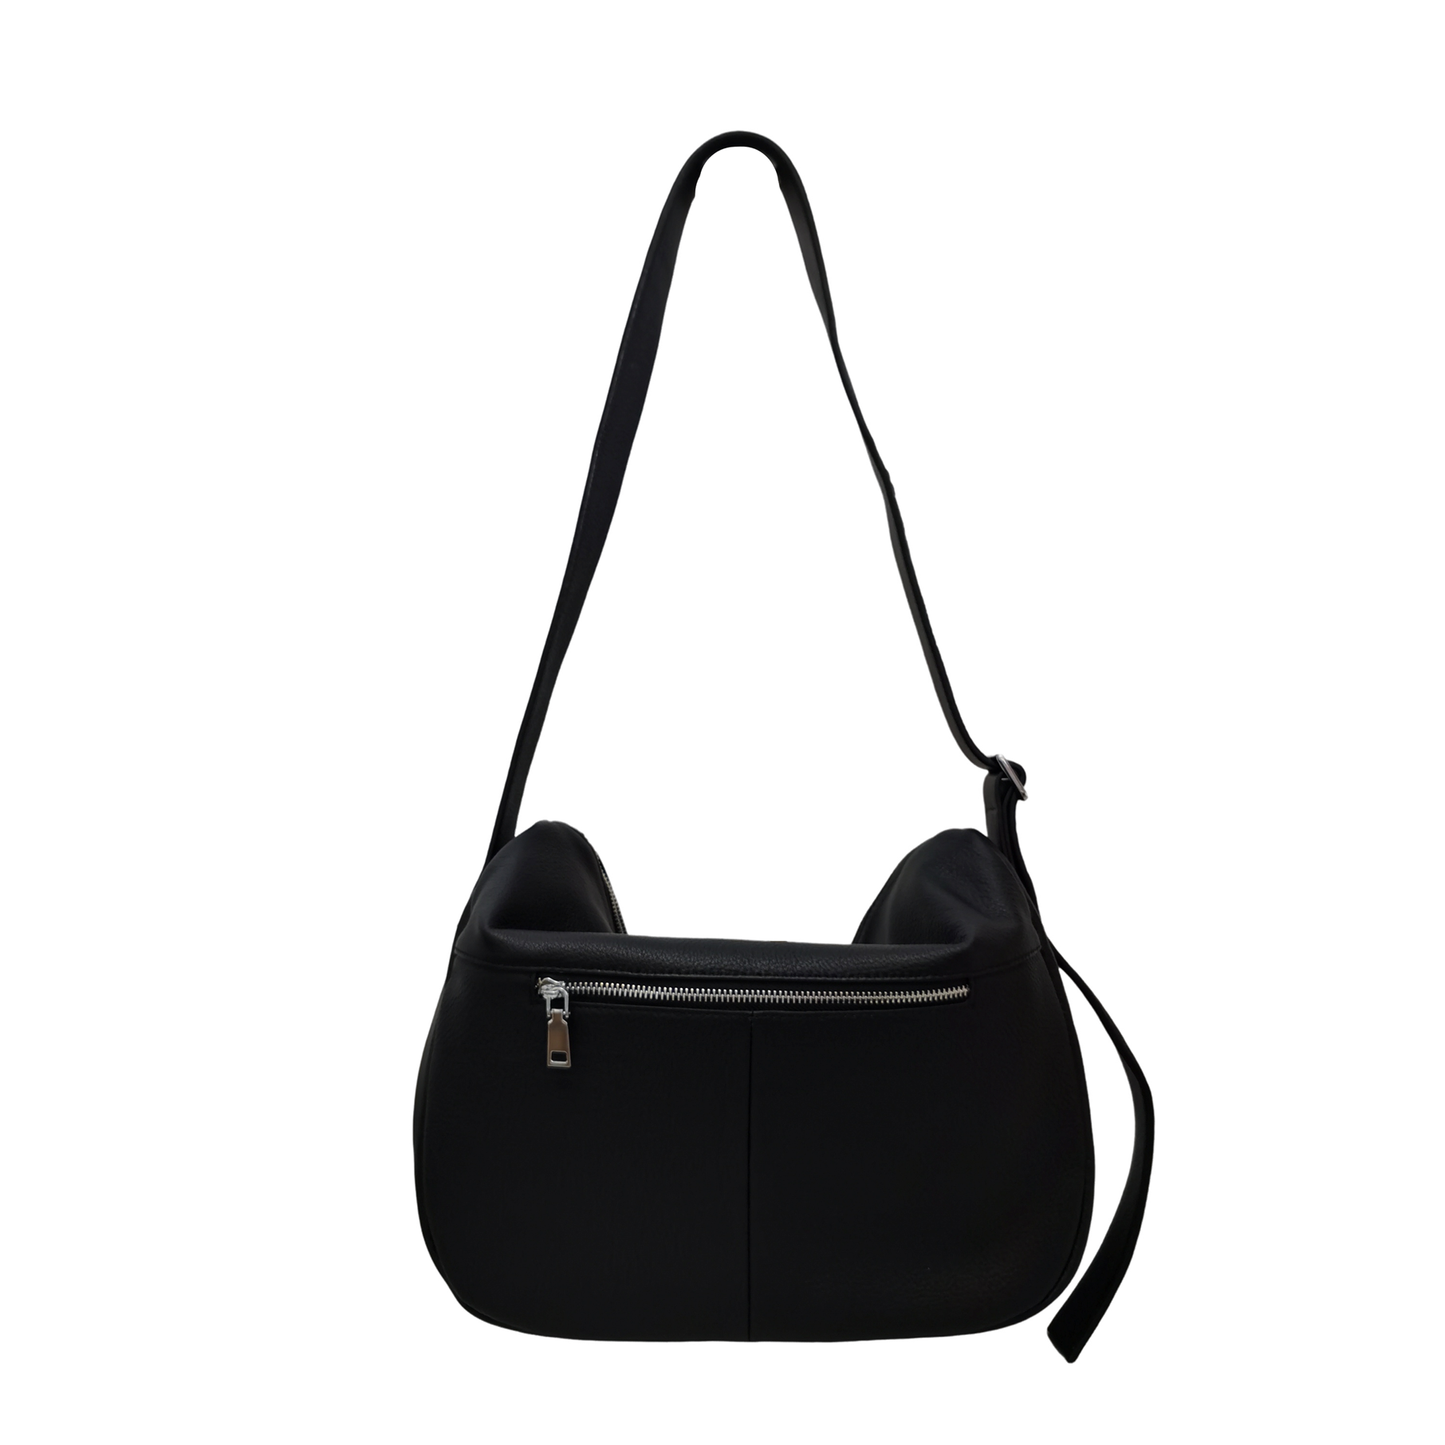 Women's genuine cowhide leather handbag Shell design